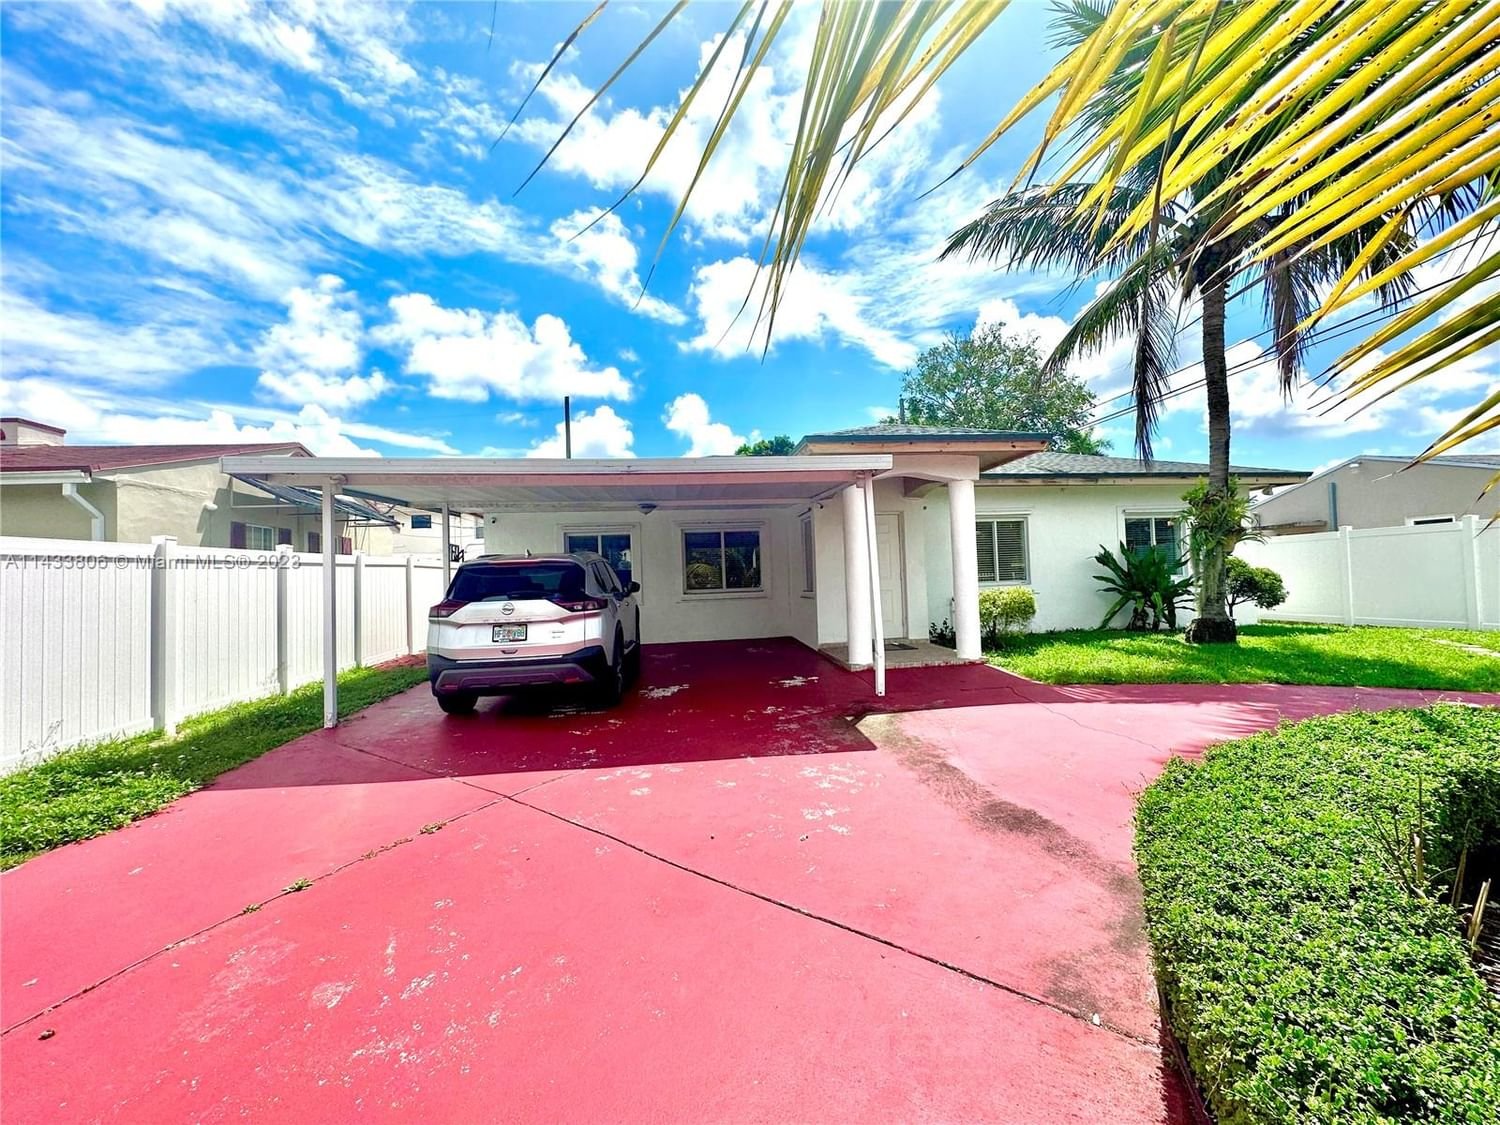 Real estate property located at 12031 5th Ave, Miami-Dade County, North Miami, FL